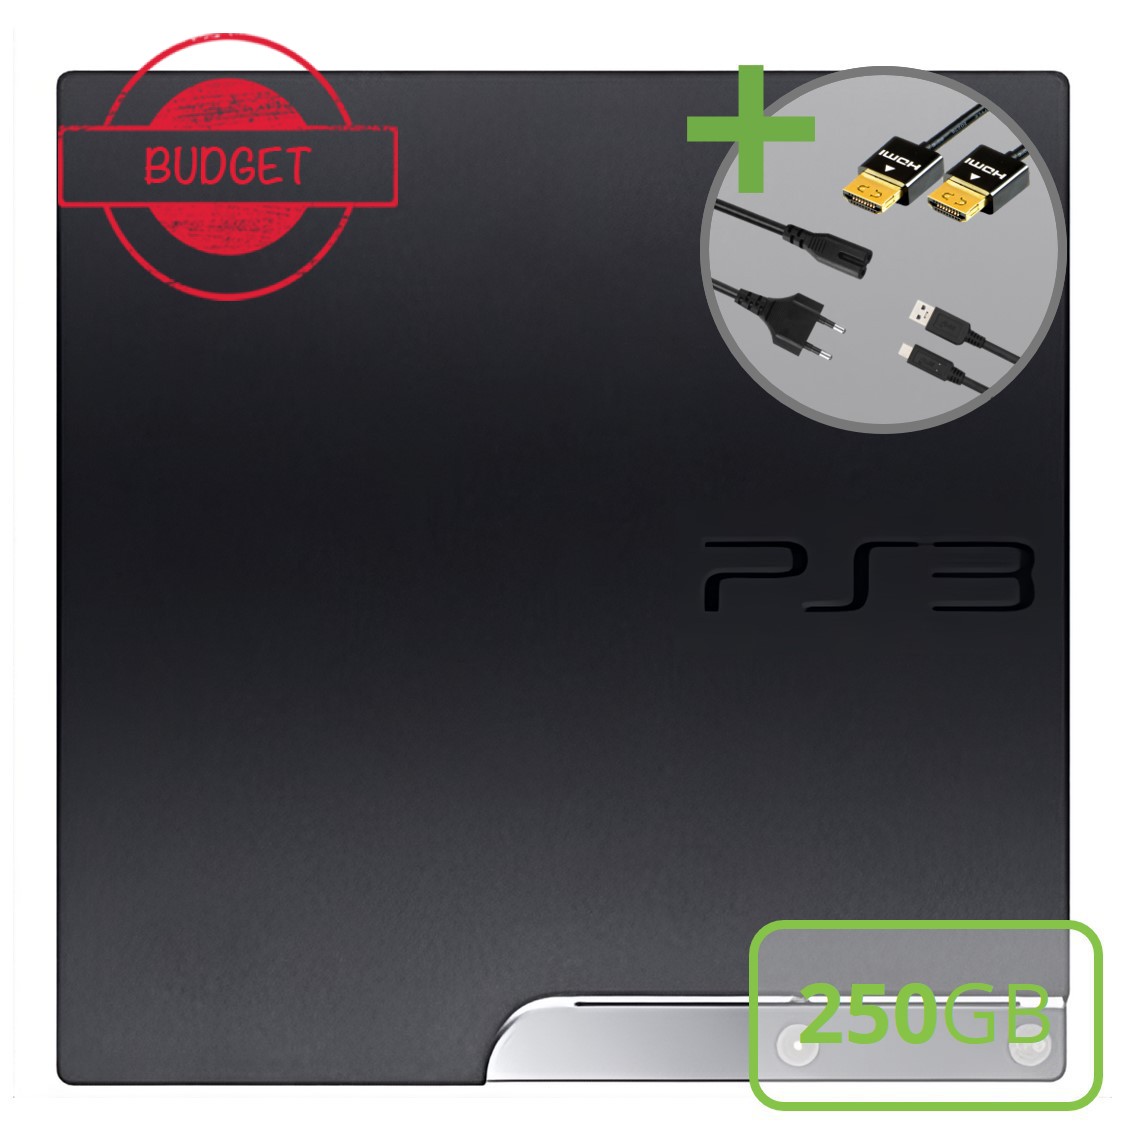 Sony PlayStation 3 Slim (250GB) Starter Pack - DualShock Edition - Budget - Playstation 3 Hardware - 3